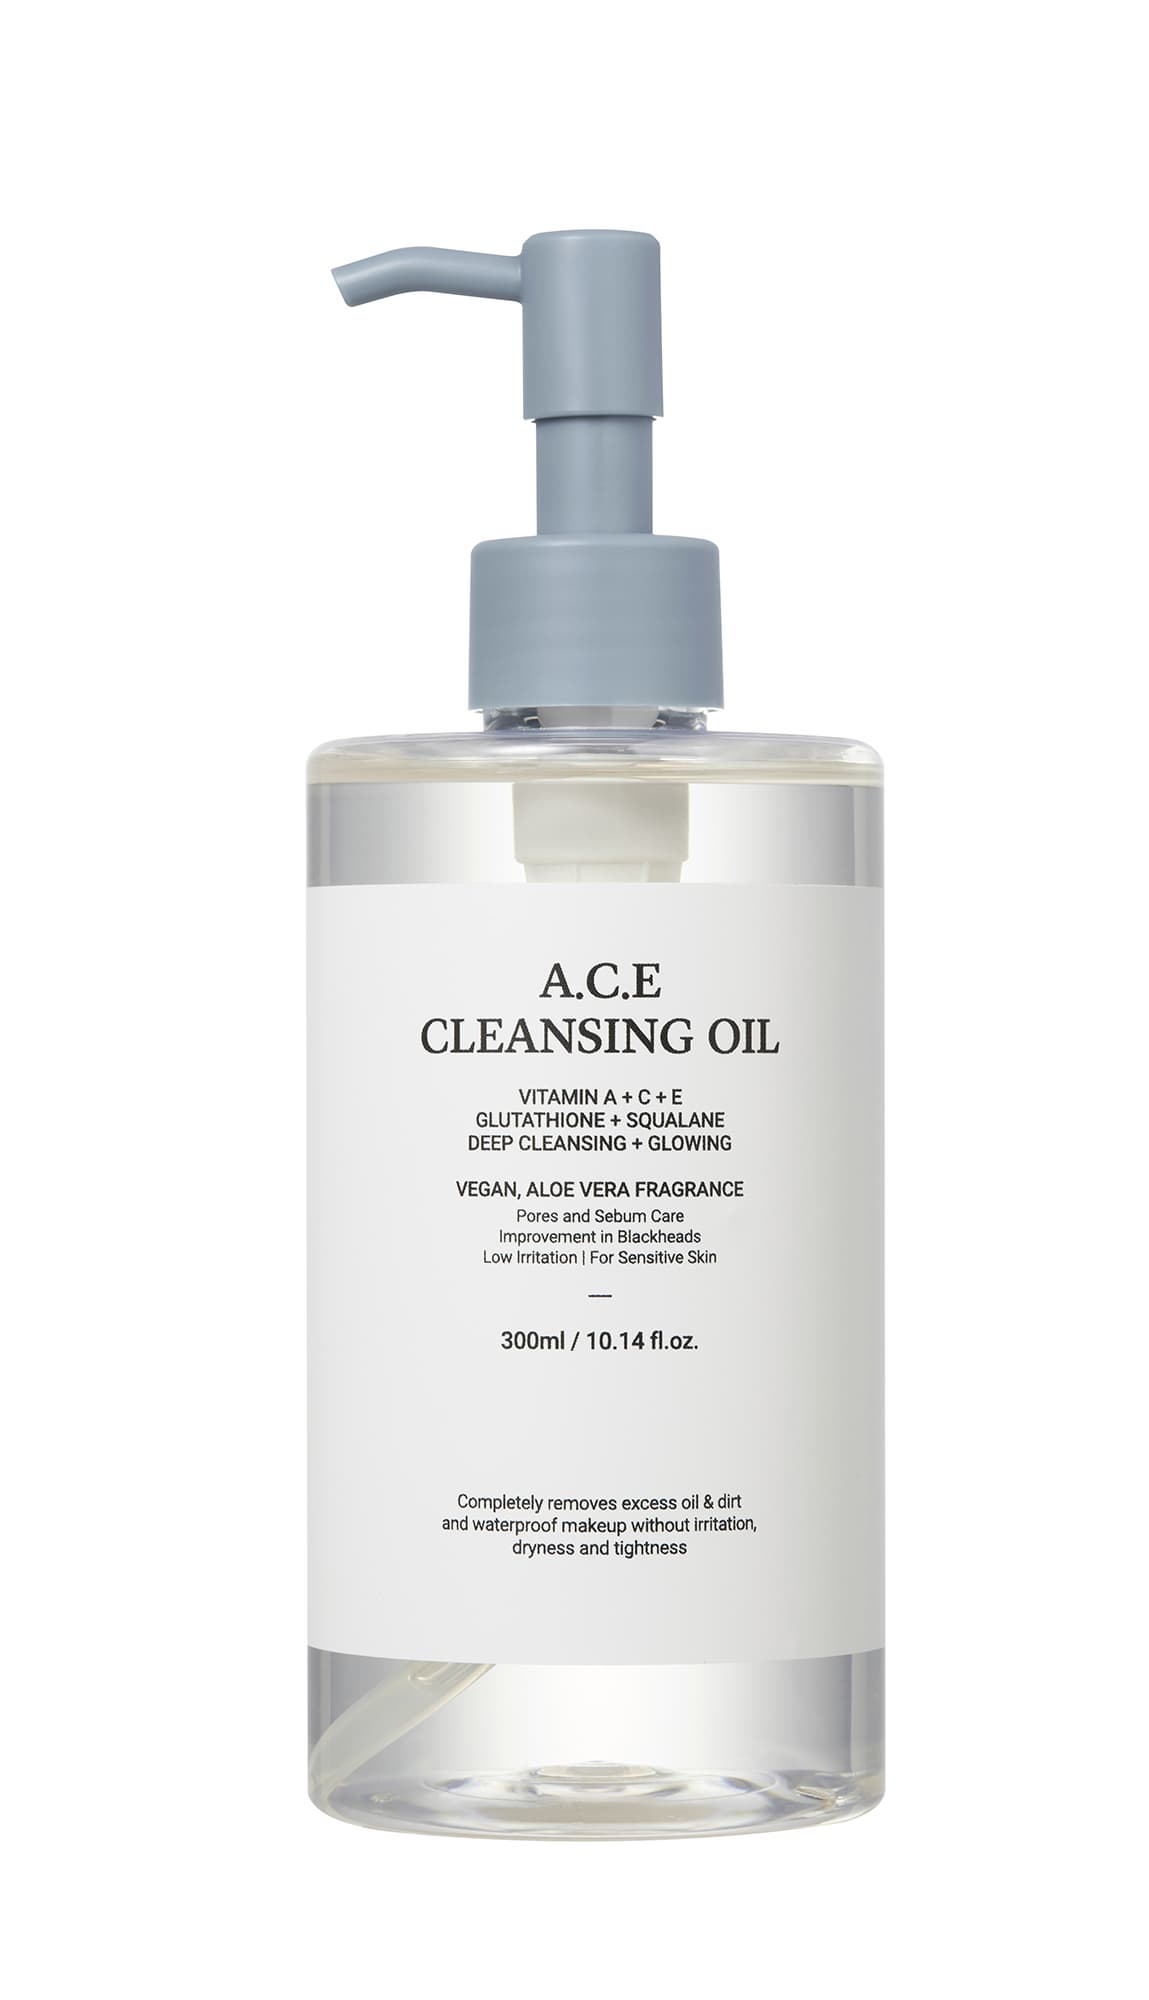 A_C_E Cleansing Oil